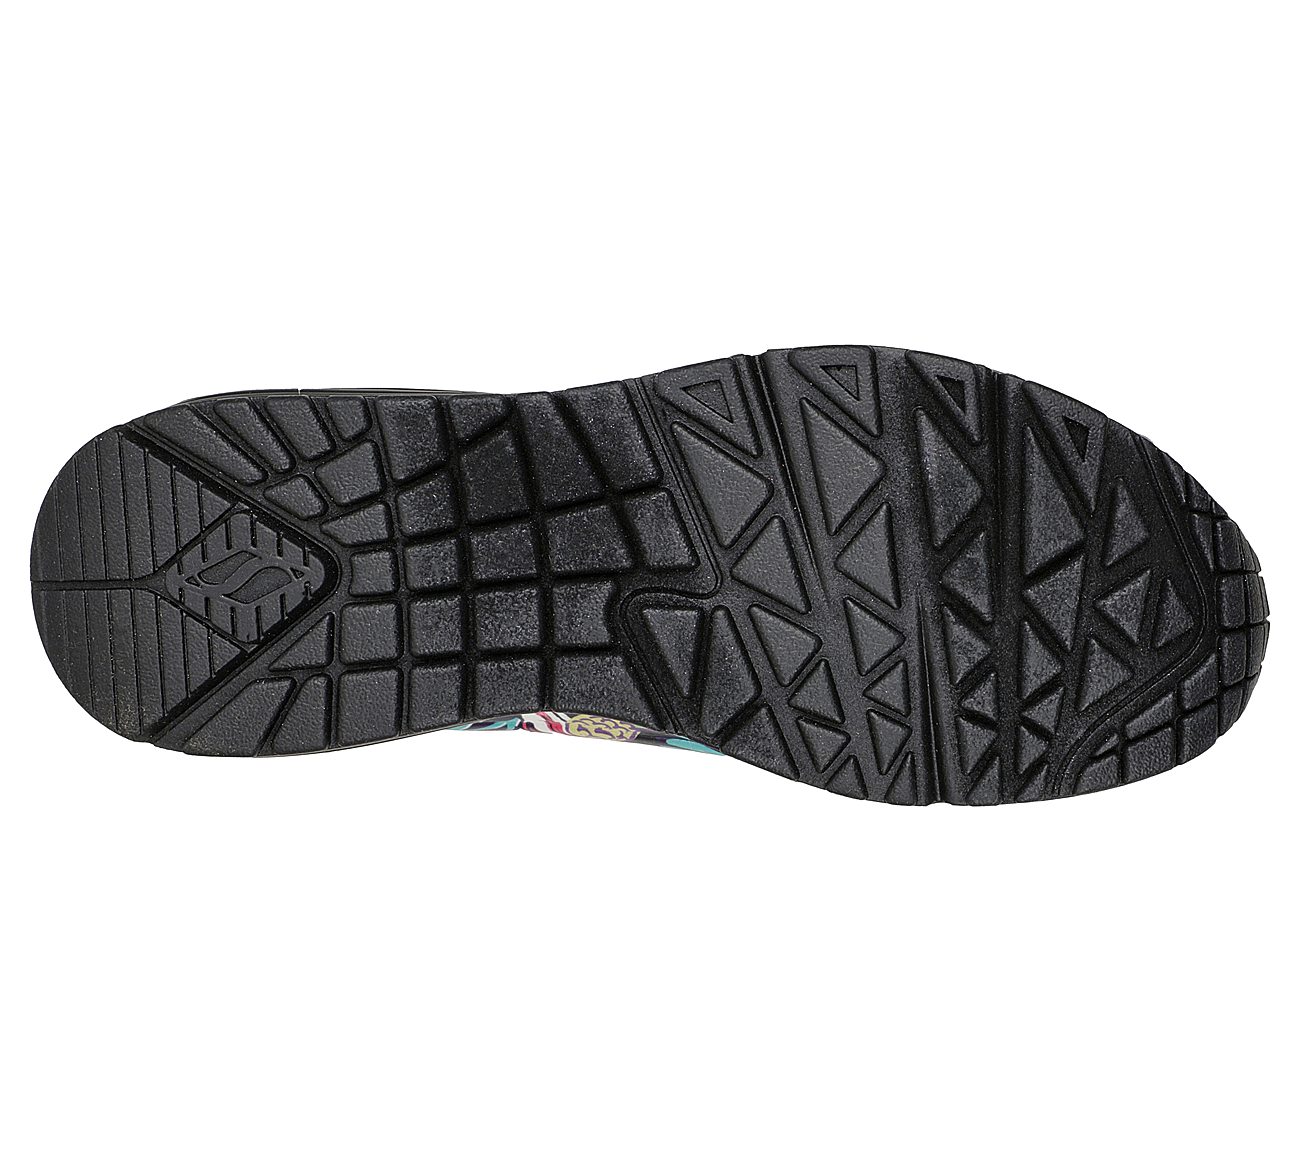 UNO - STREET ART, BLACK/MULTI Footwear Bottom View